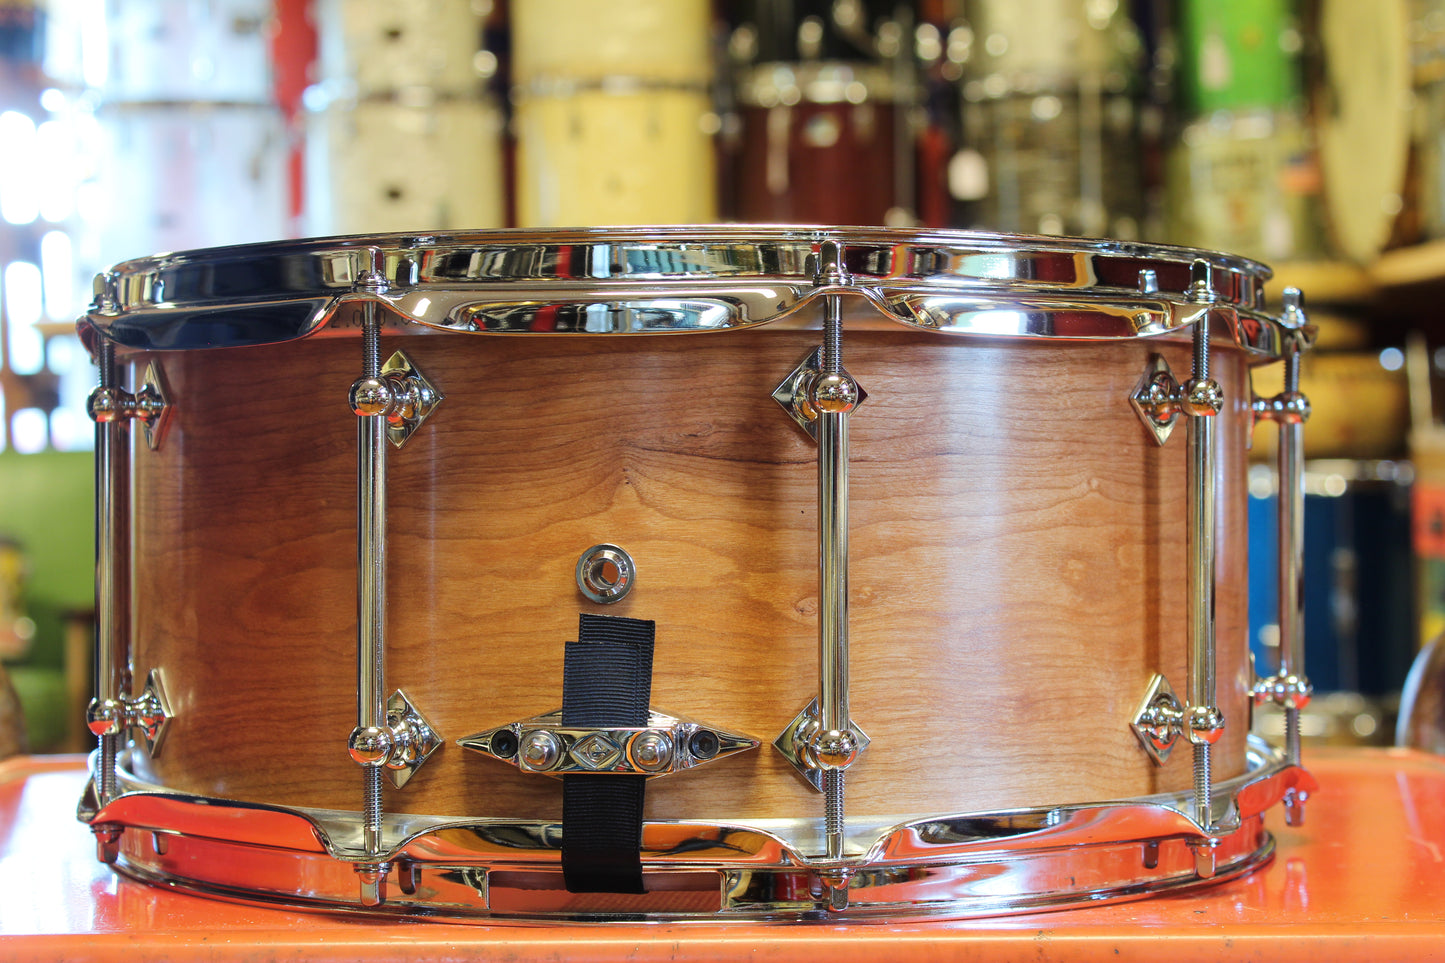 Craviotto Drum Co. Cherry 6.5"x14" Snare Drum